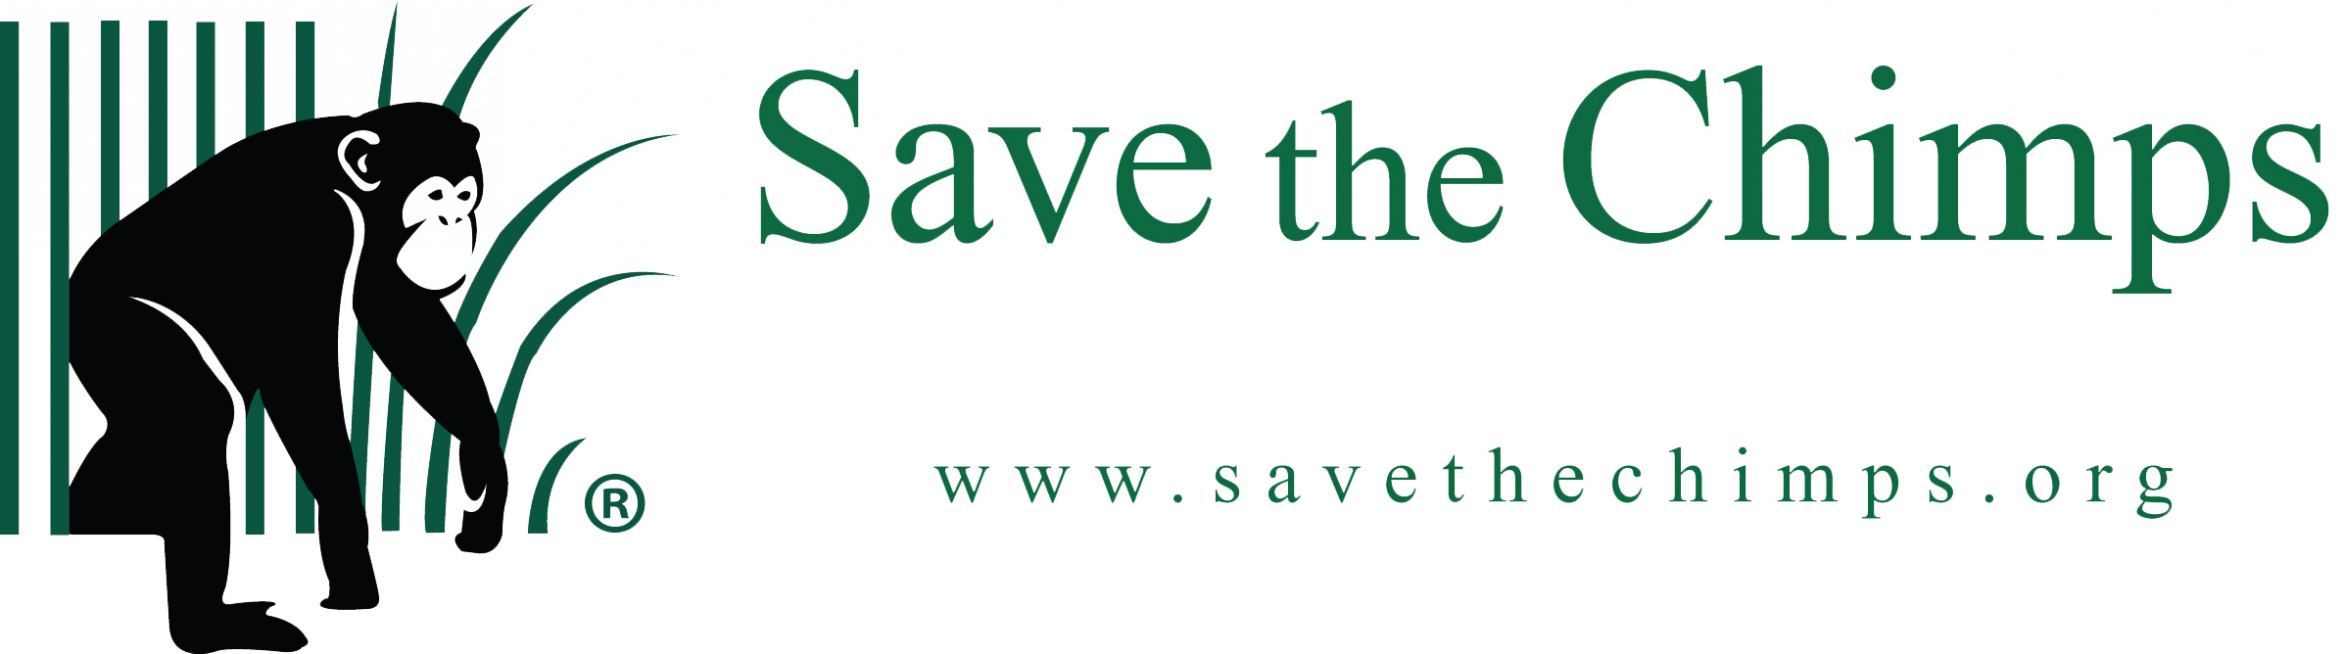 Save the Chimps, Inc. Logo